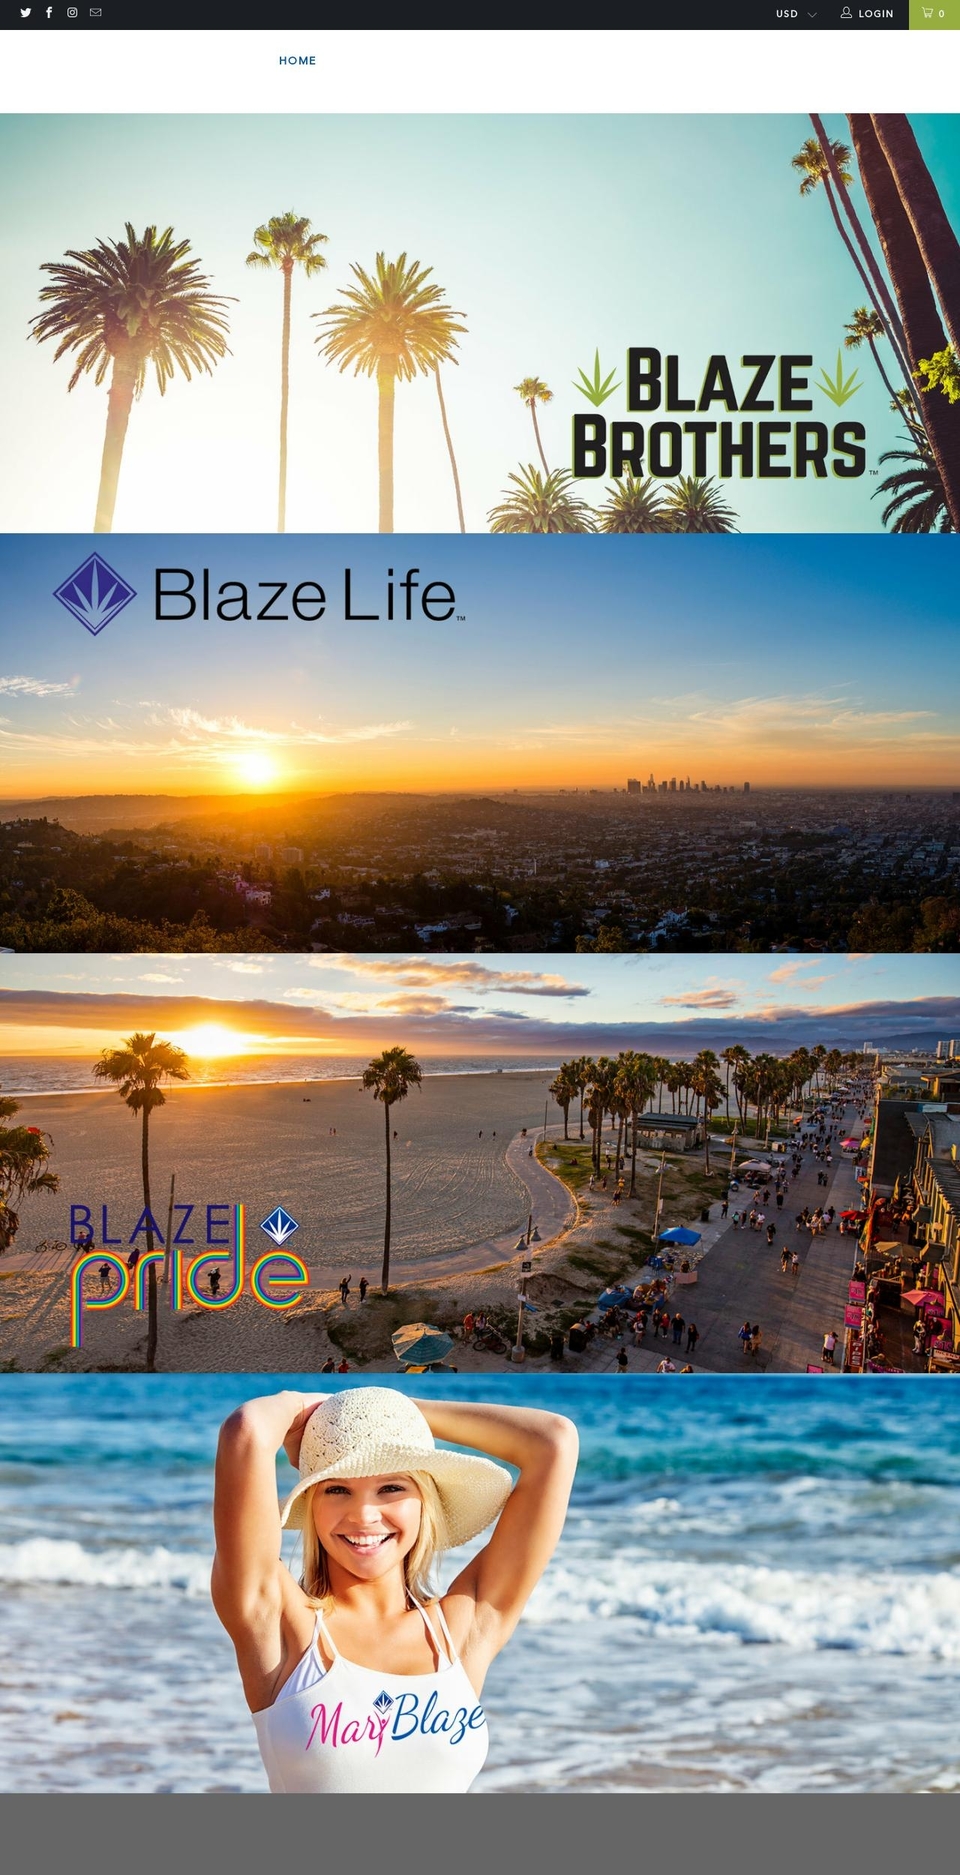 Copy of BlazeLife Shopify theme site example blazebrothers.la